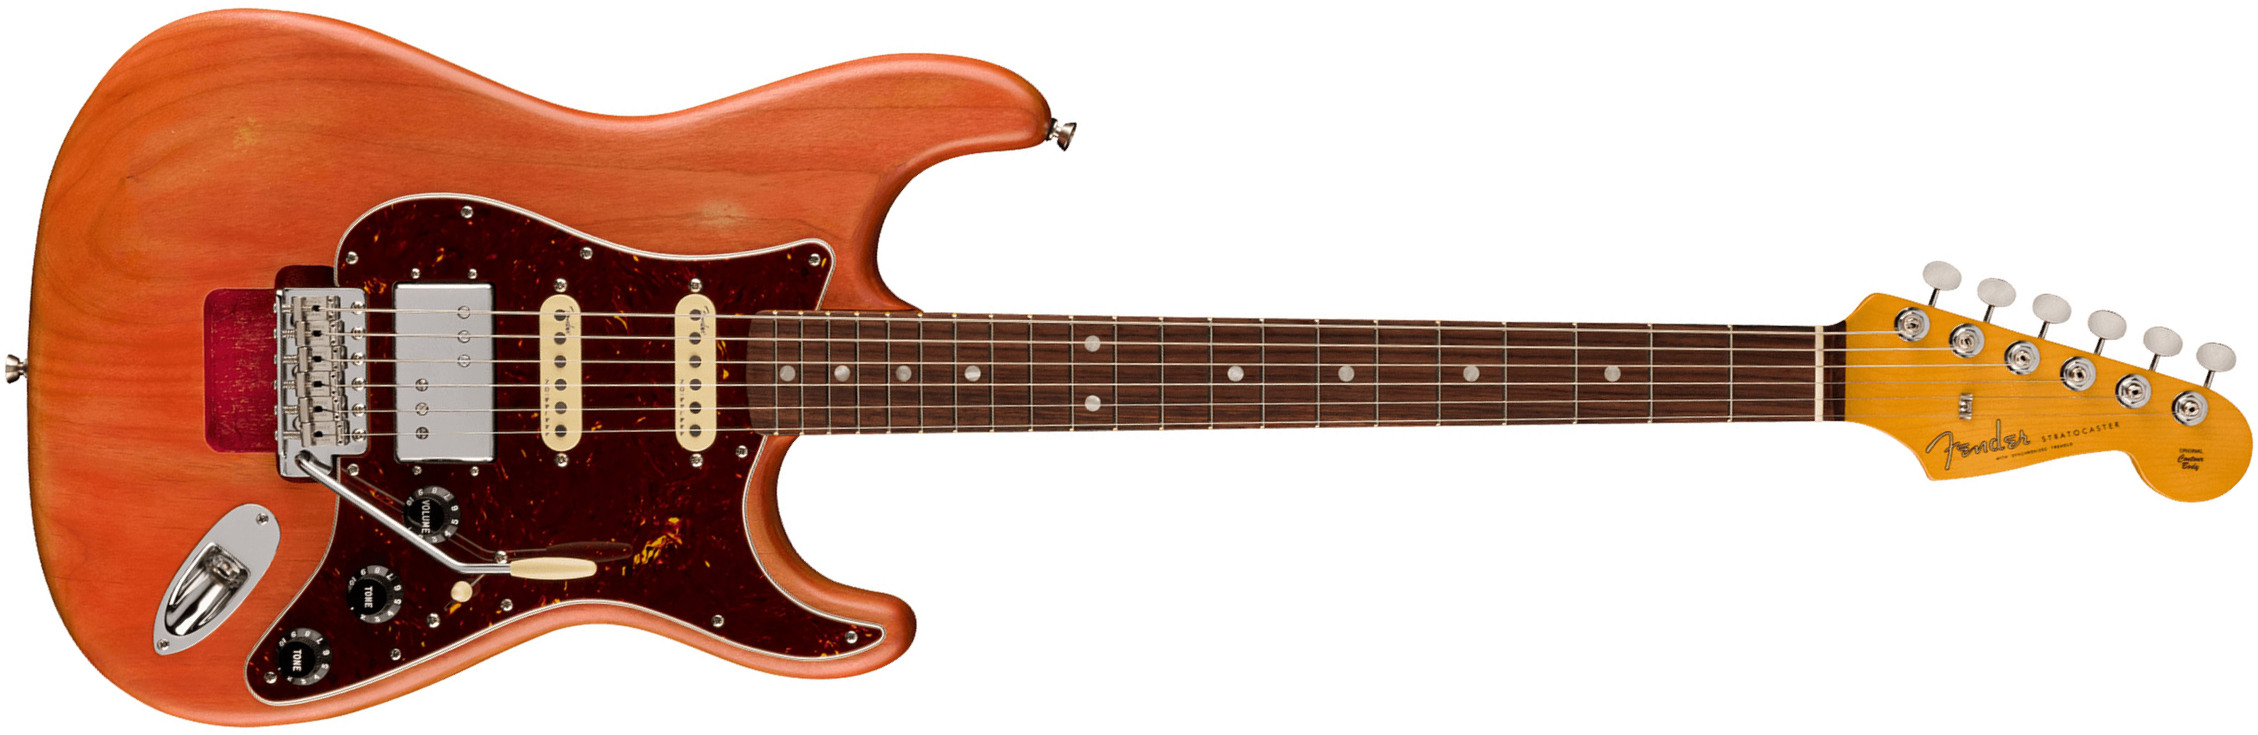 Fender Michael Landau Strat Coma Stories Usa Signature Hss Trem Rw - Coma Red - E-Gitarre in Str-Form - Main picture